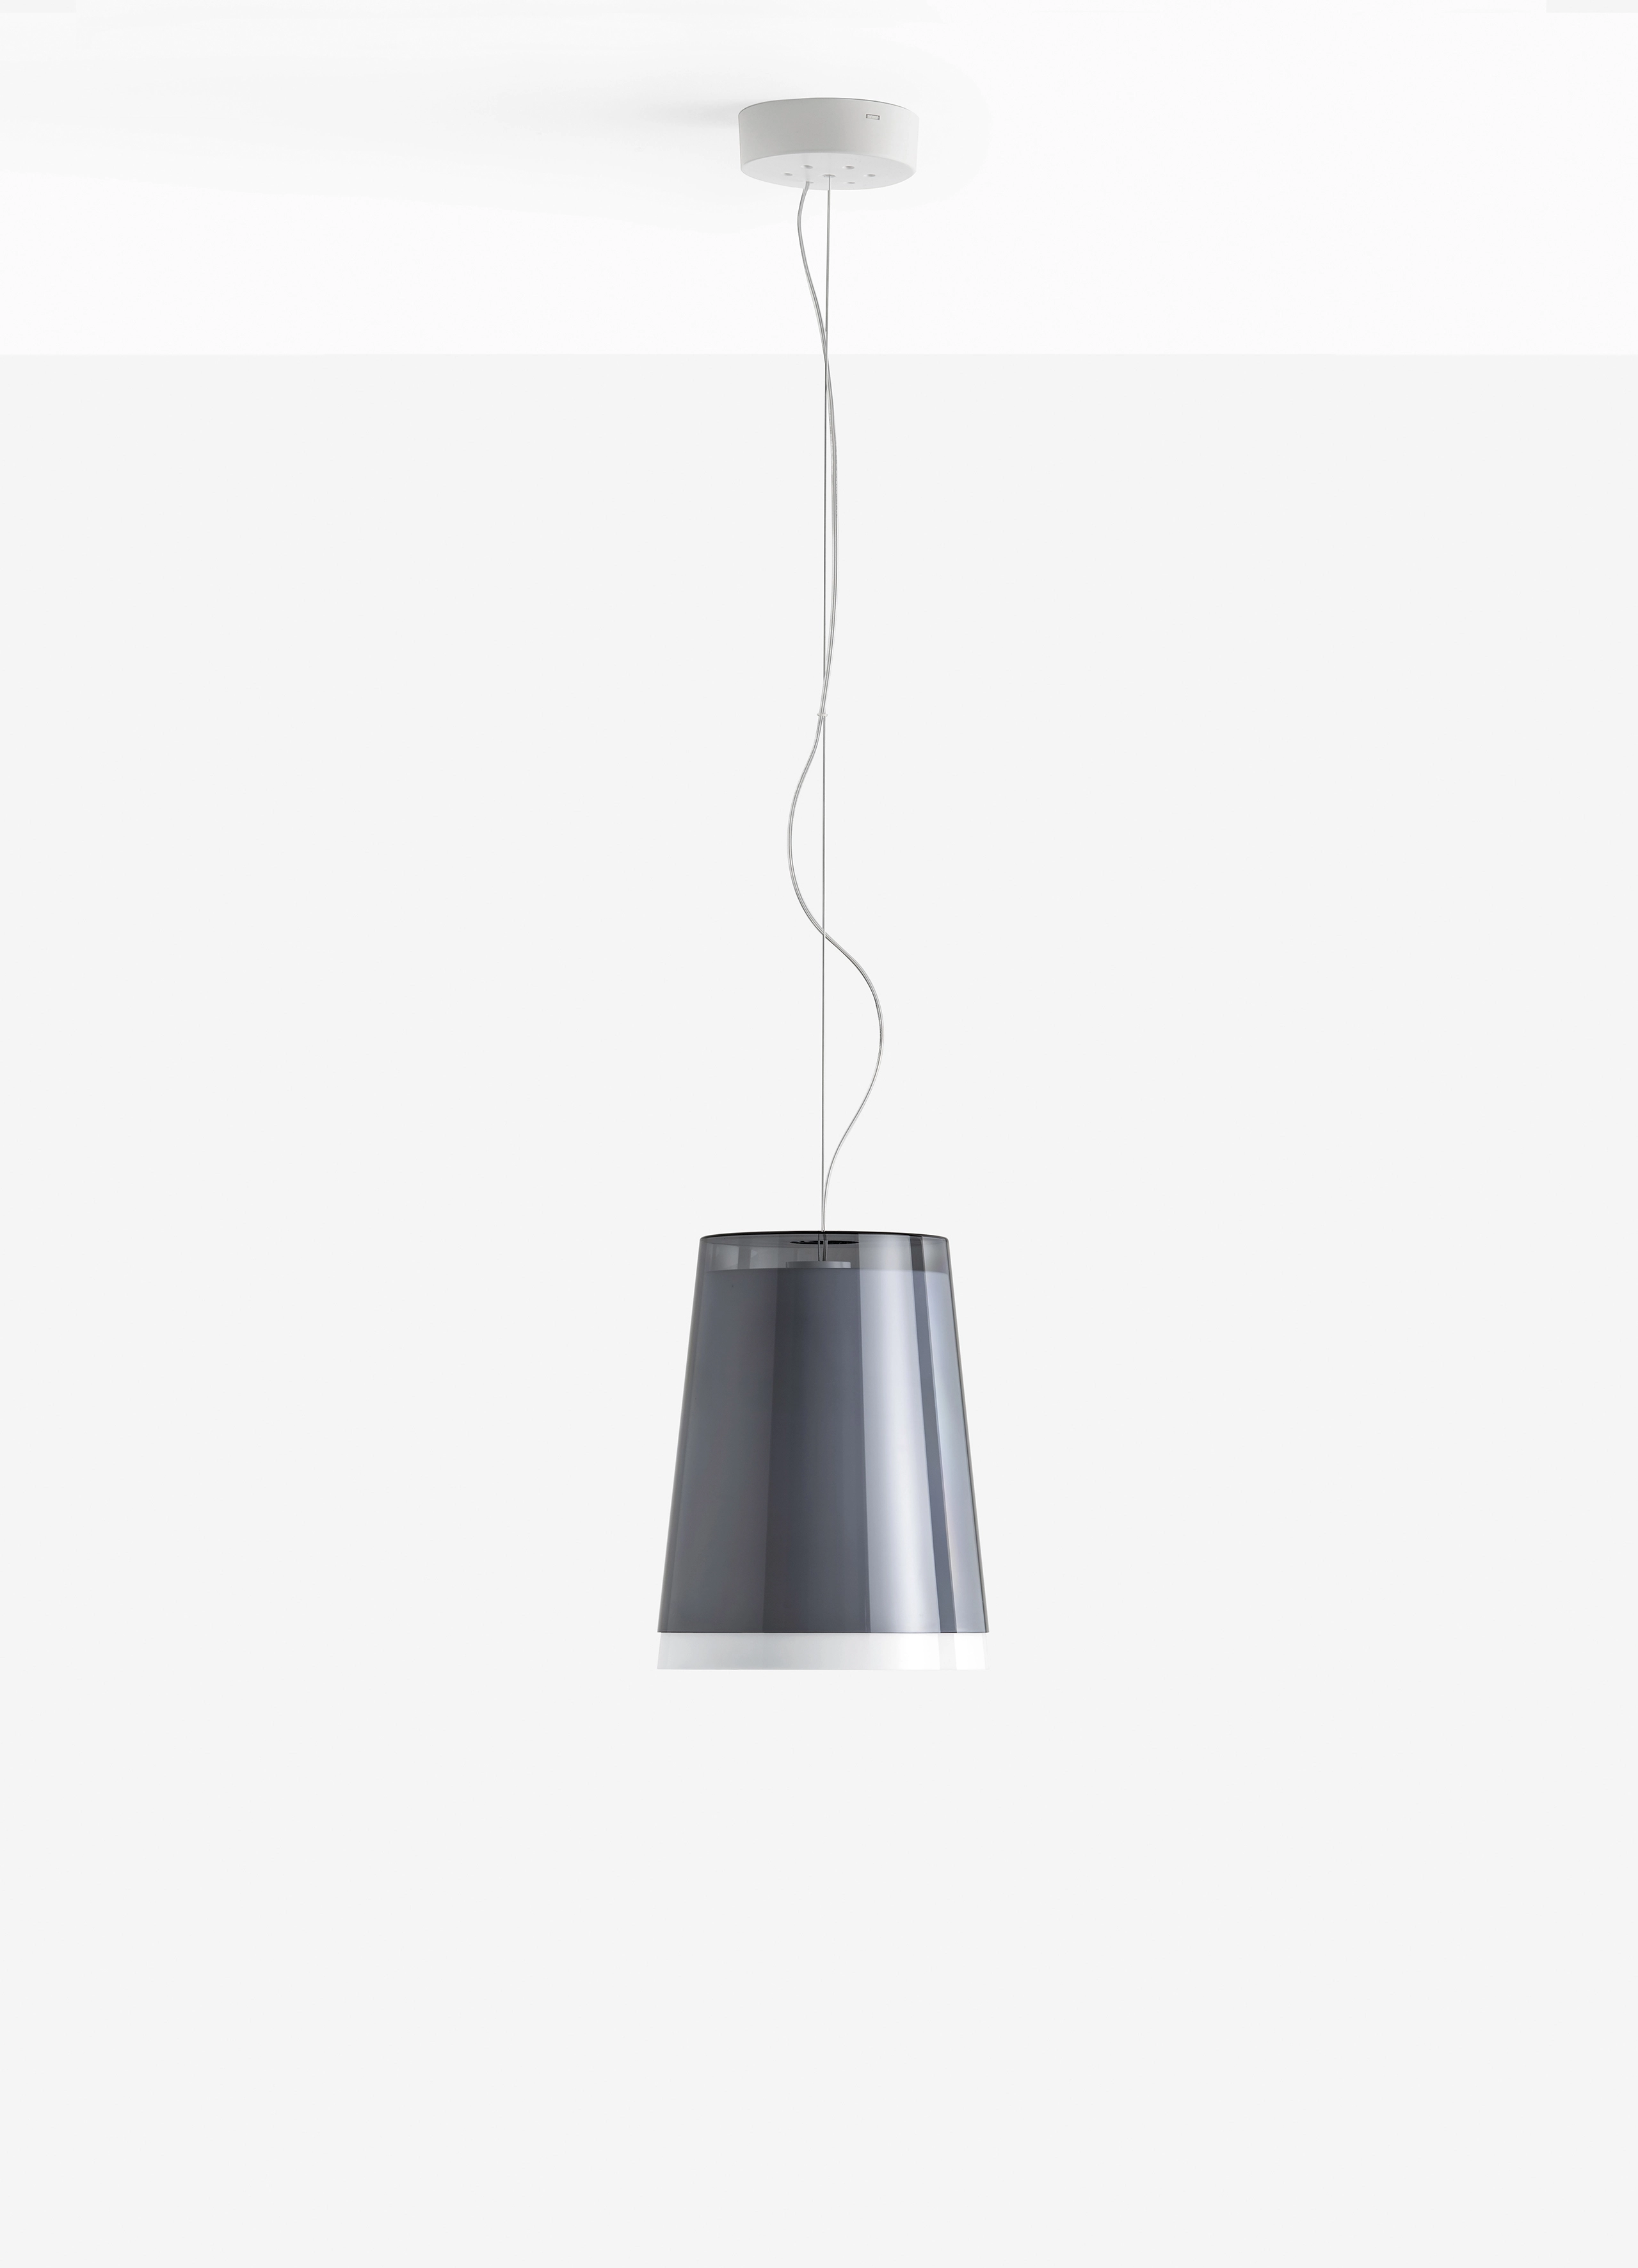 Hängelampe L001S/AA - Design Lampe von Pedrali FU - rauchgrau transparent weiss 1,8 Meter